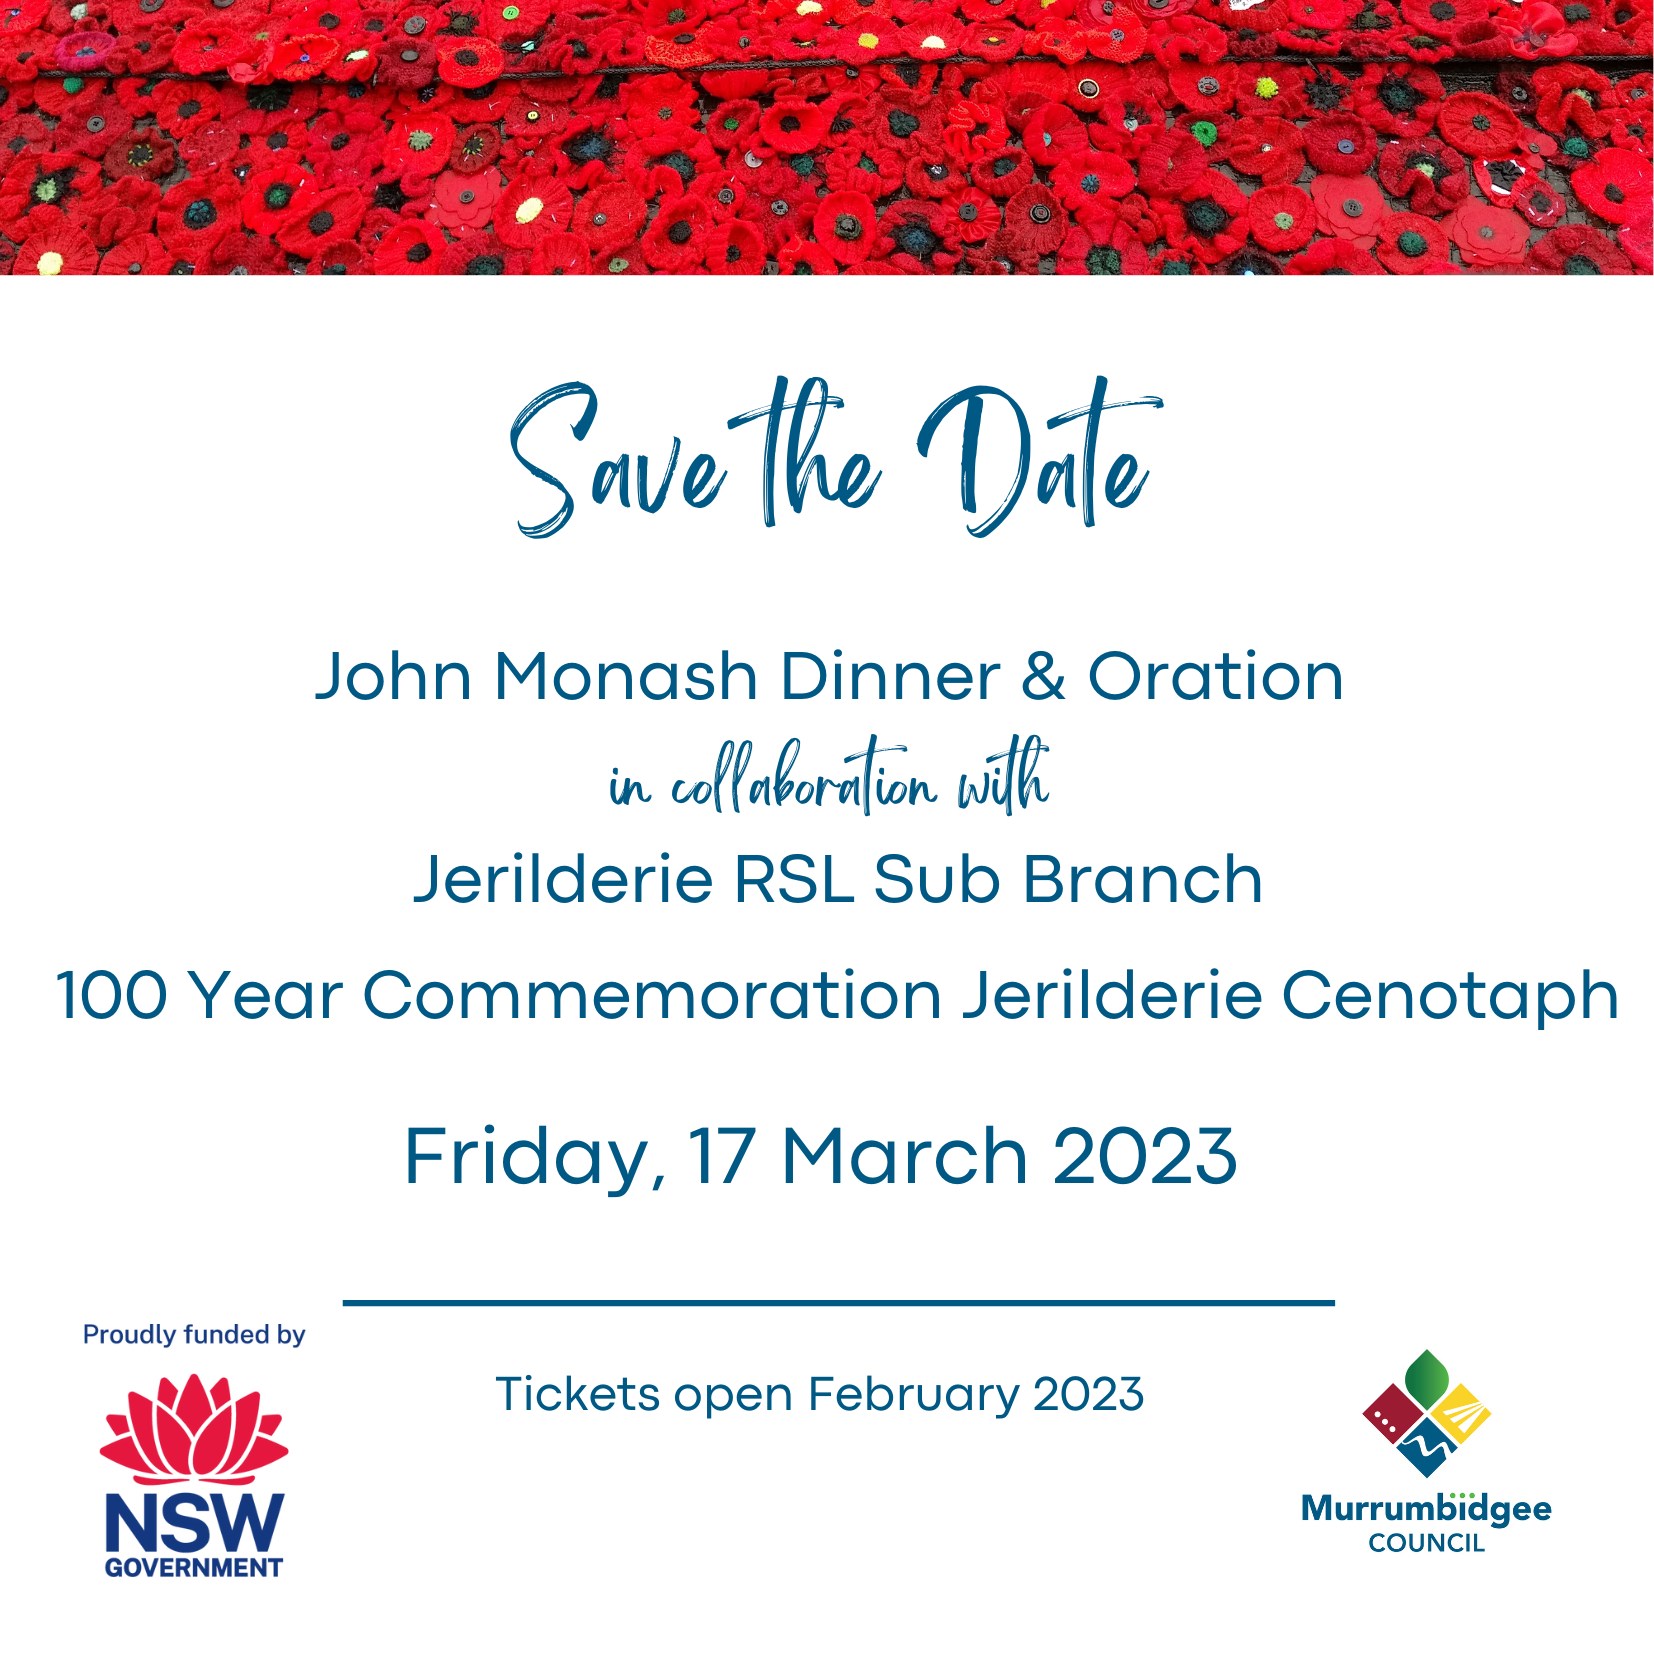 John Monash Dinner & Oration in collaboration with the Jerilderie RSL Sub Branch 100 Year Commemoration Jerilderie Cenotaph